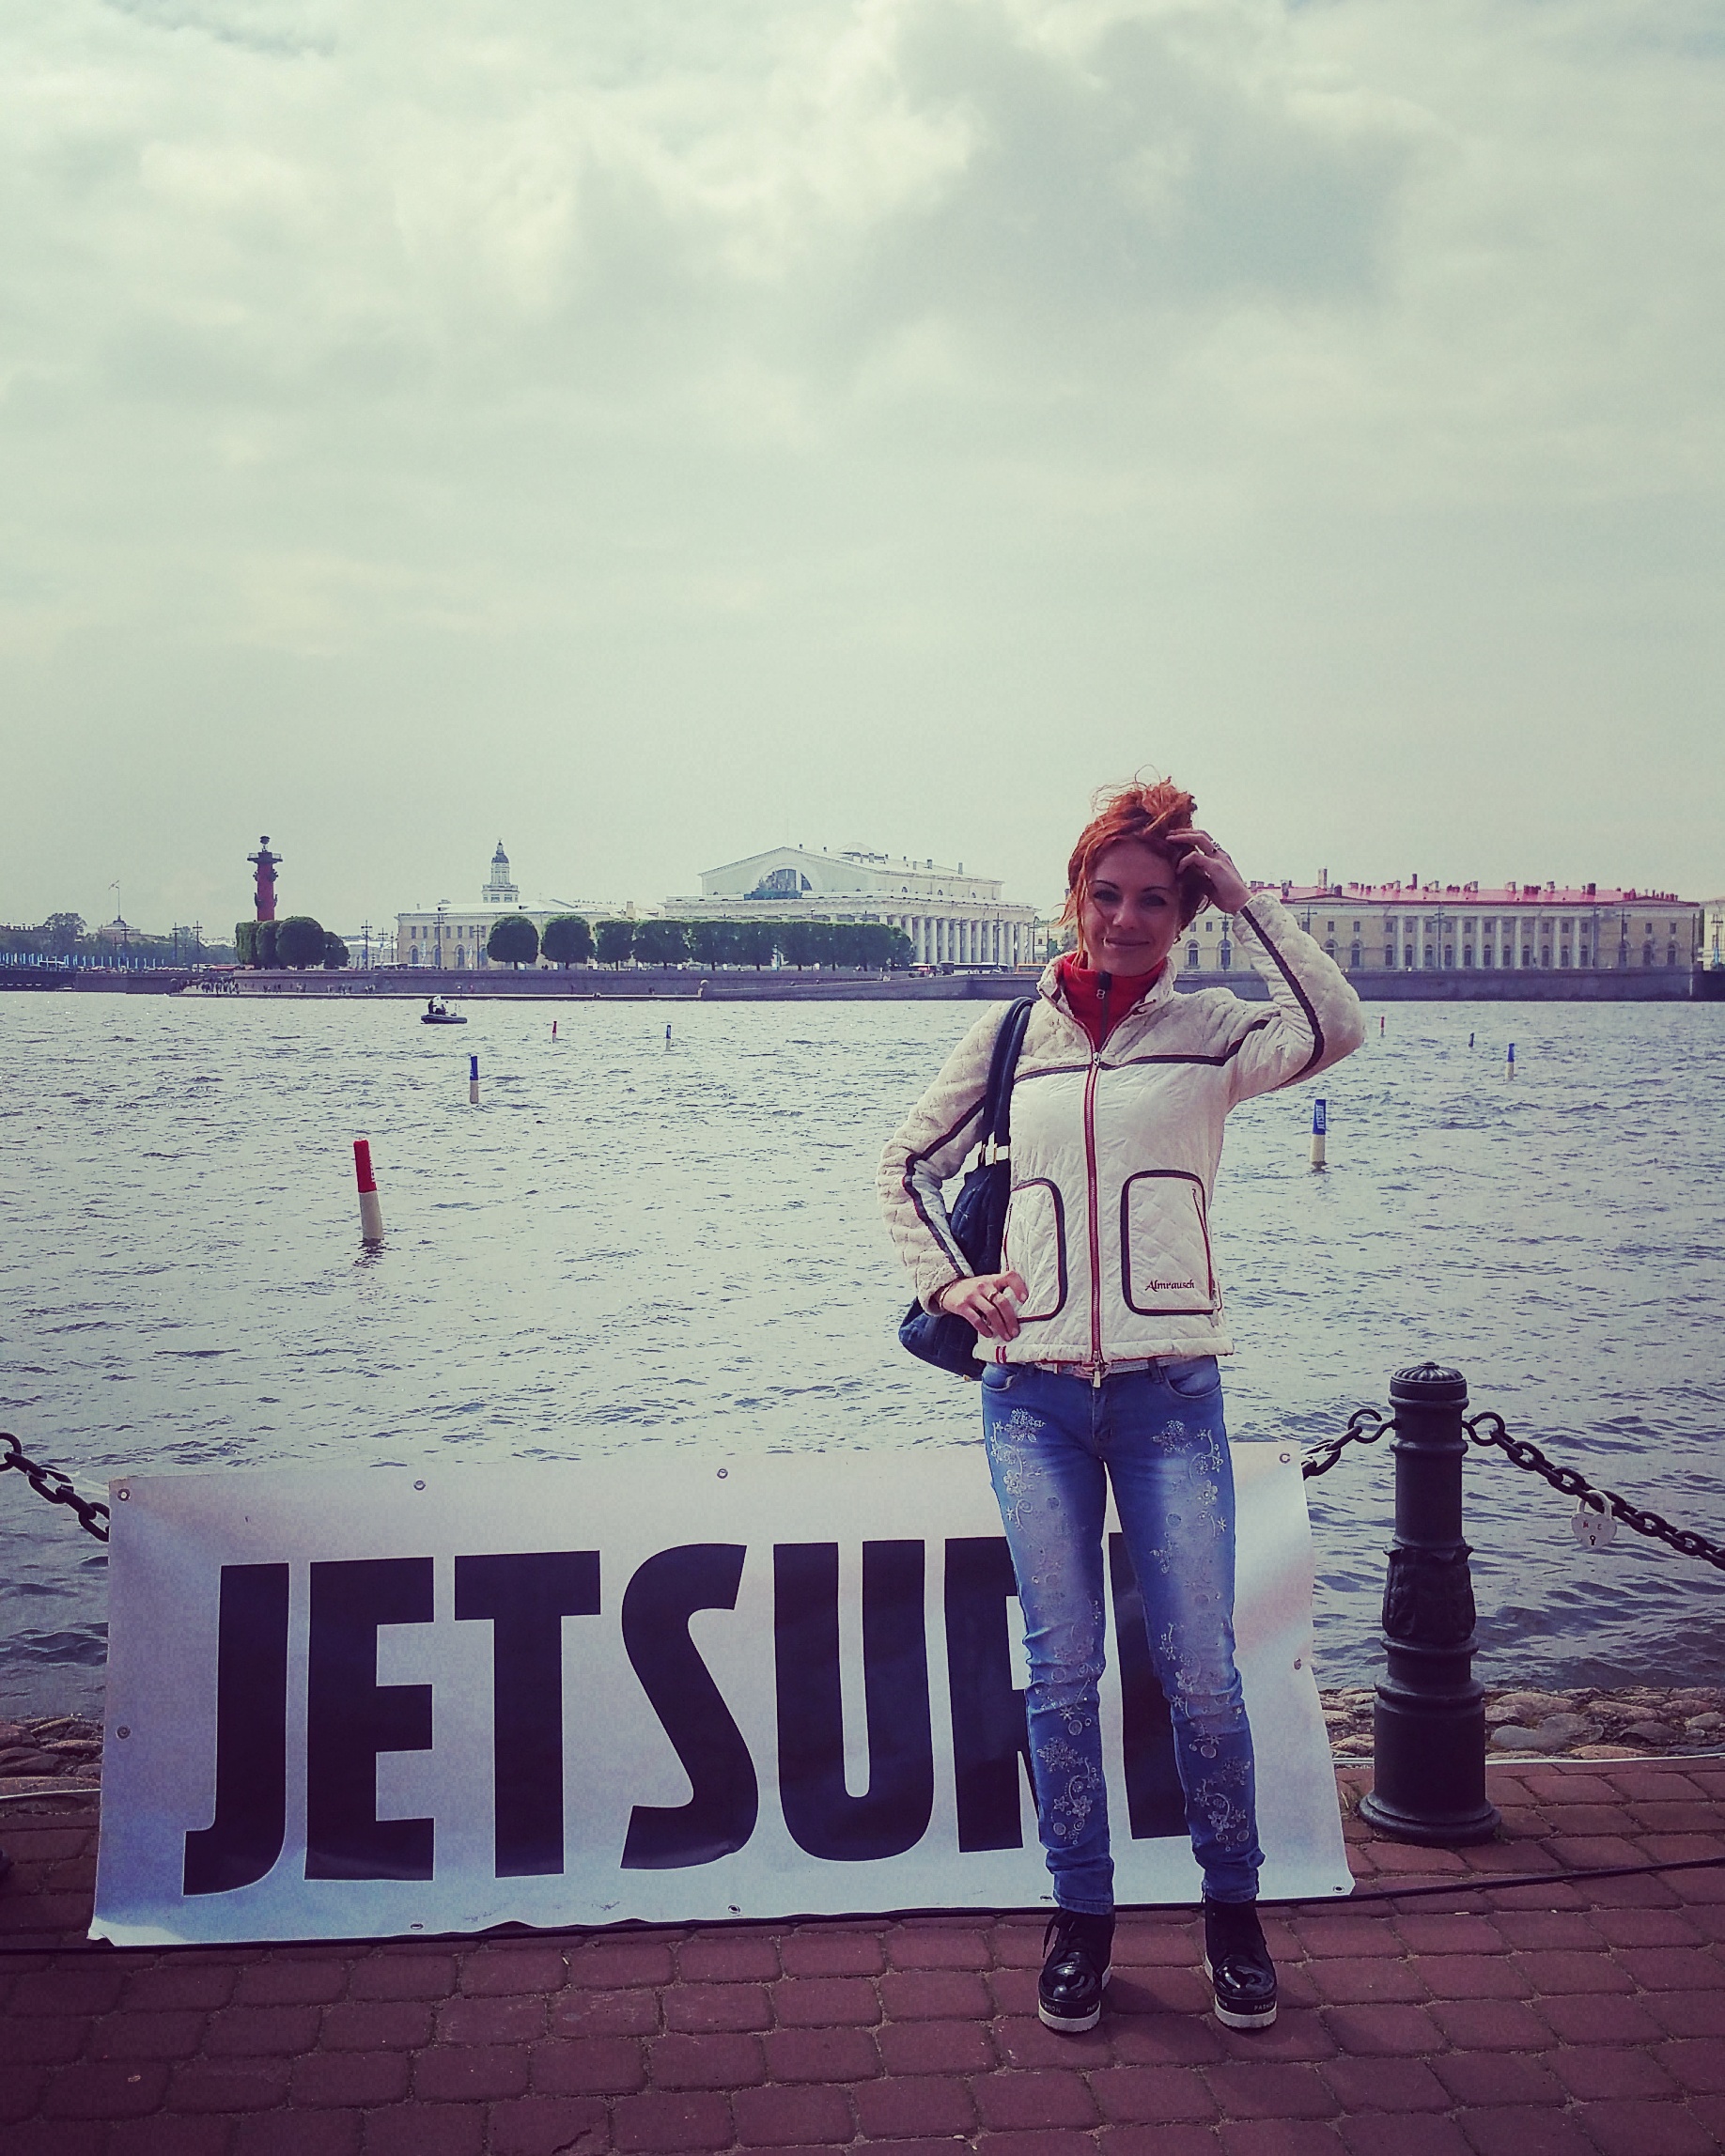 #jetsurf.su  #gssport.ru  #jetsurfmoscow  #jetsurf.com #джет-серф #jetsurf #джетсерф #jet #surf #jetboard#surfing #серфсмотором  #jetsurfing#крыльянаневе #крыльянаневе2017#wingsontheneva2017#wingsonthenevafest #ловиволну